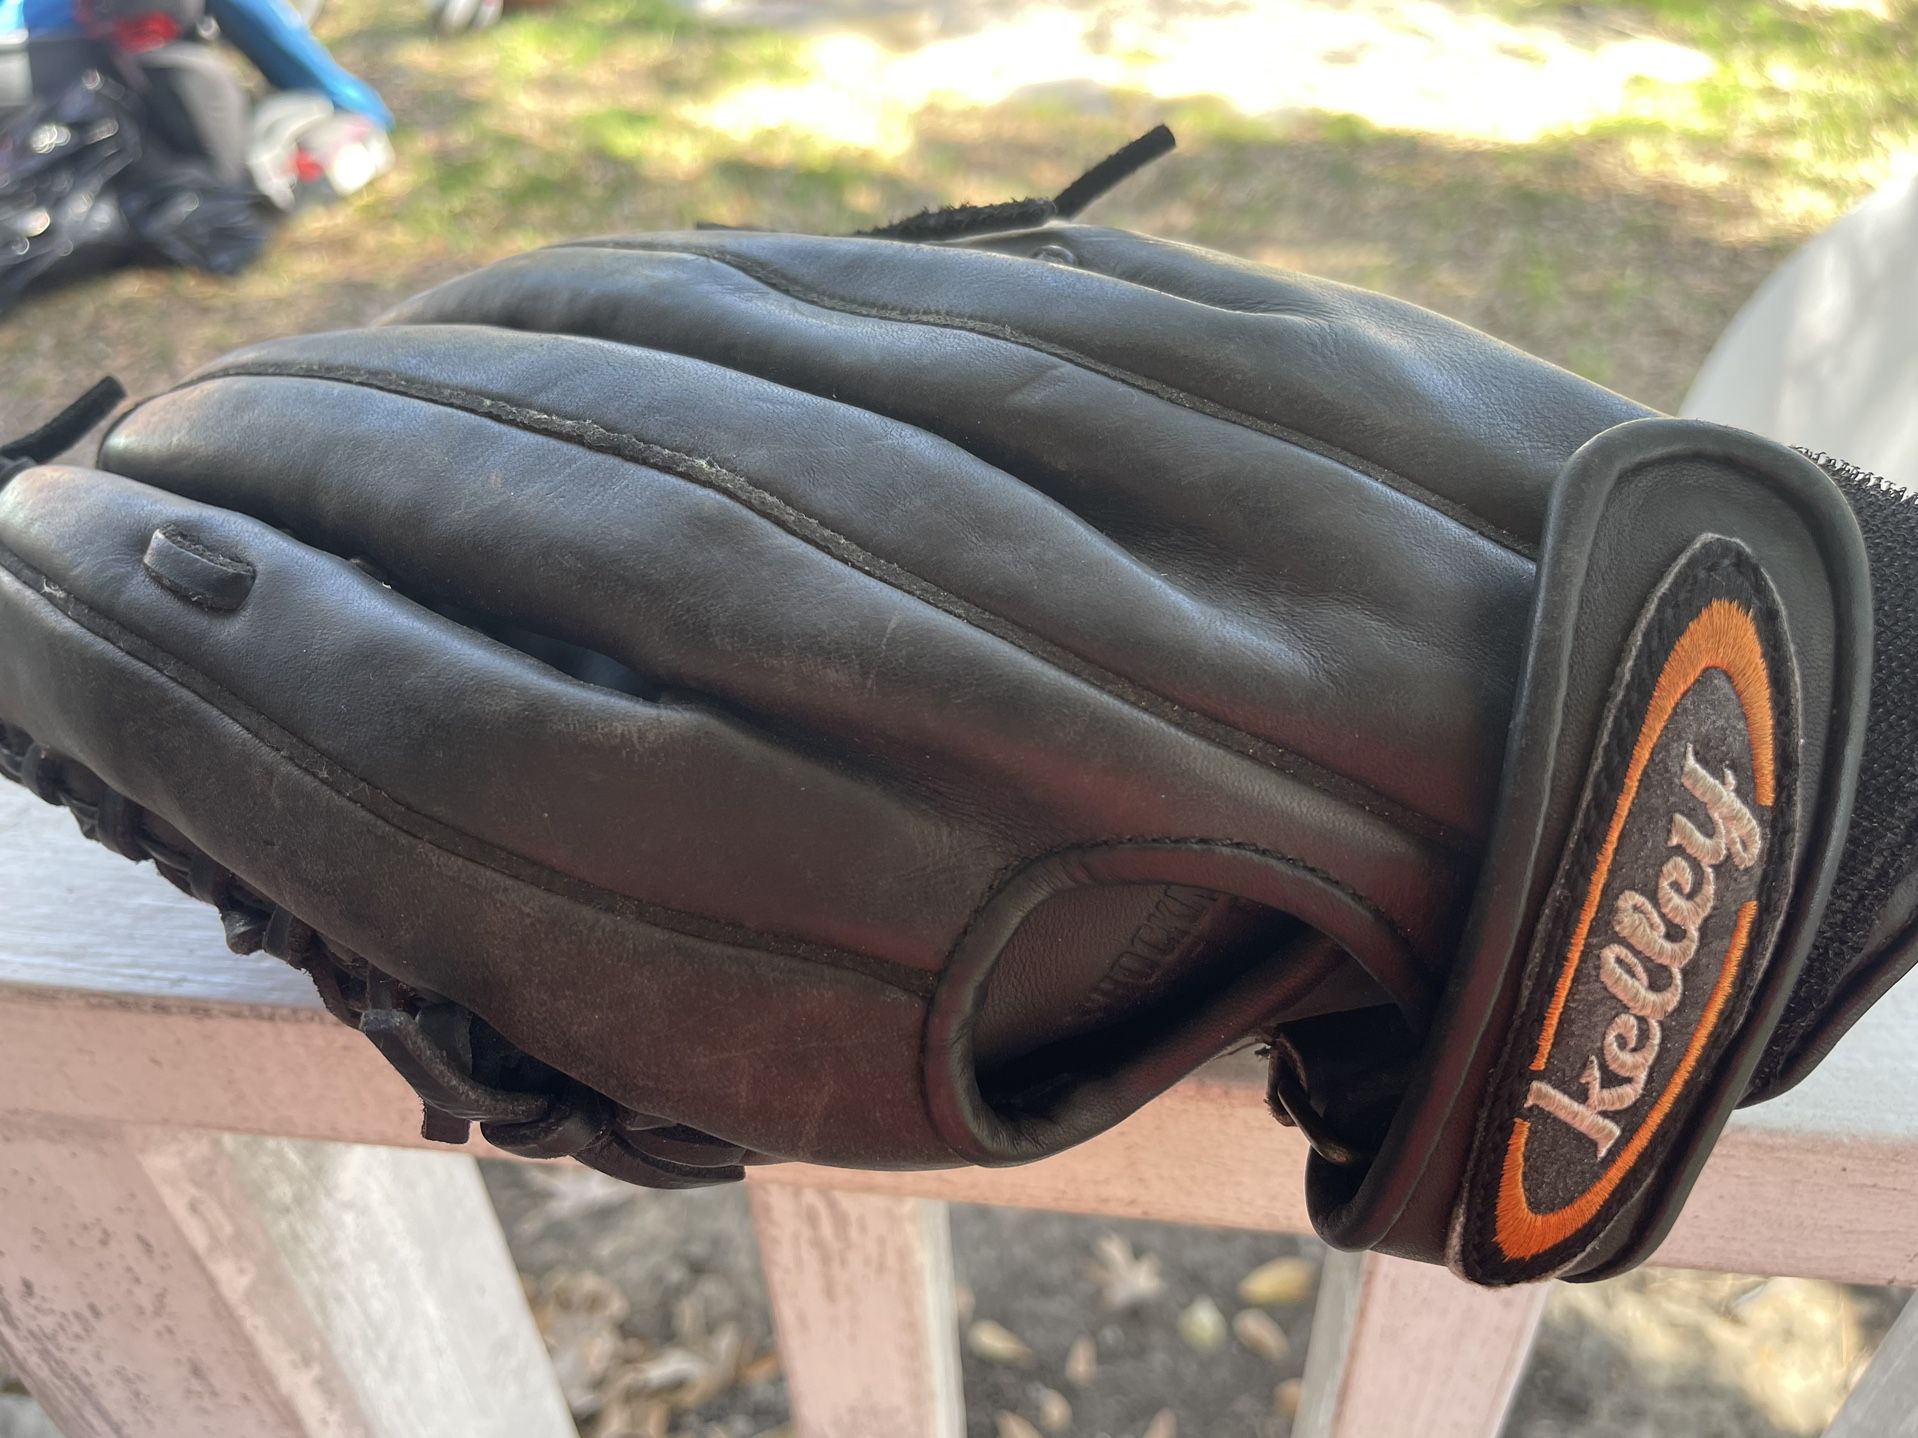 Kelley Men’s Softball Glove